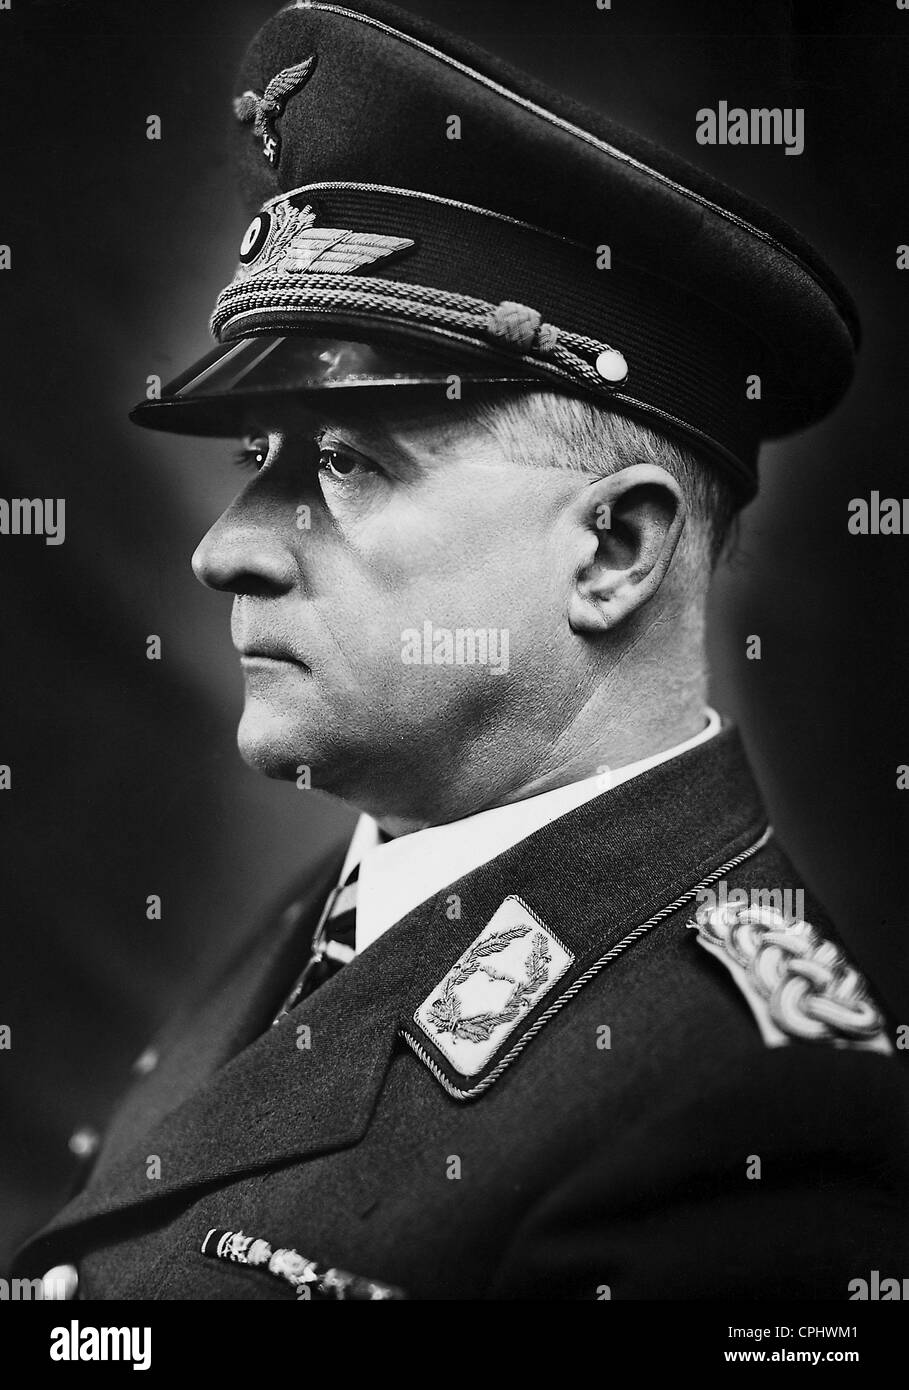 Robert von greim hi-res stock photography and images - Alamy